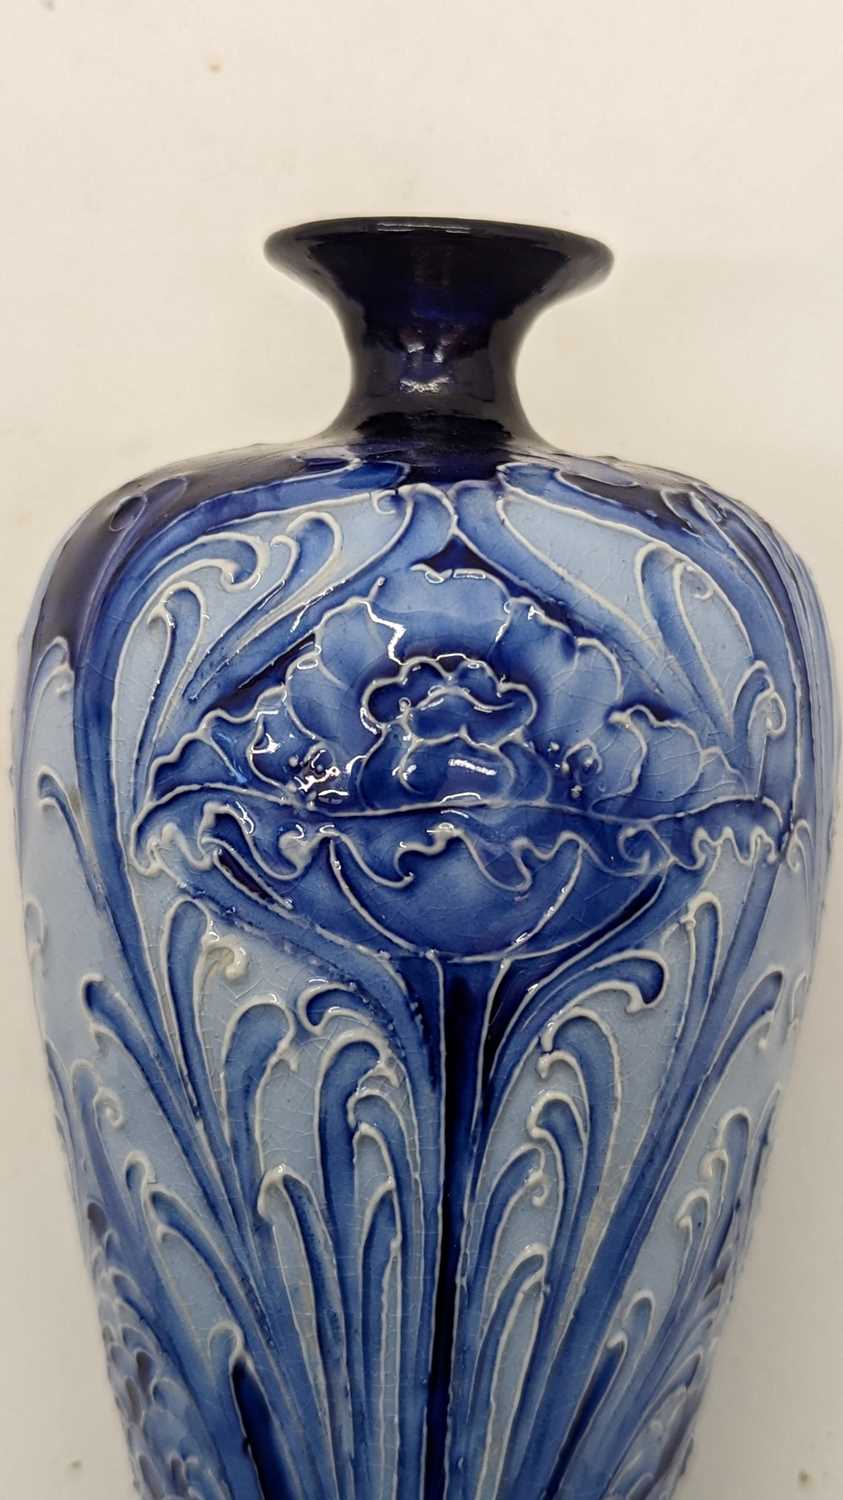 A pair of James Macintyre Florian ware vases, - Image 11 of 28